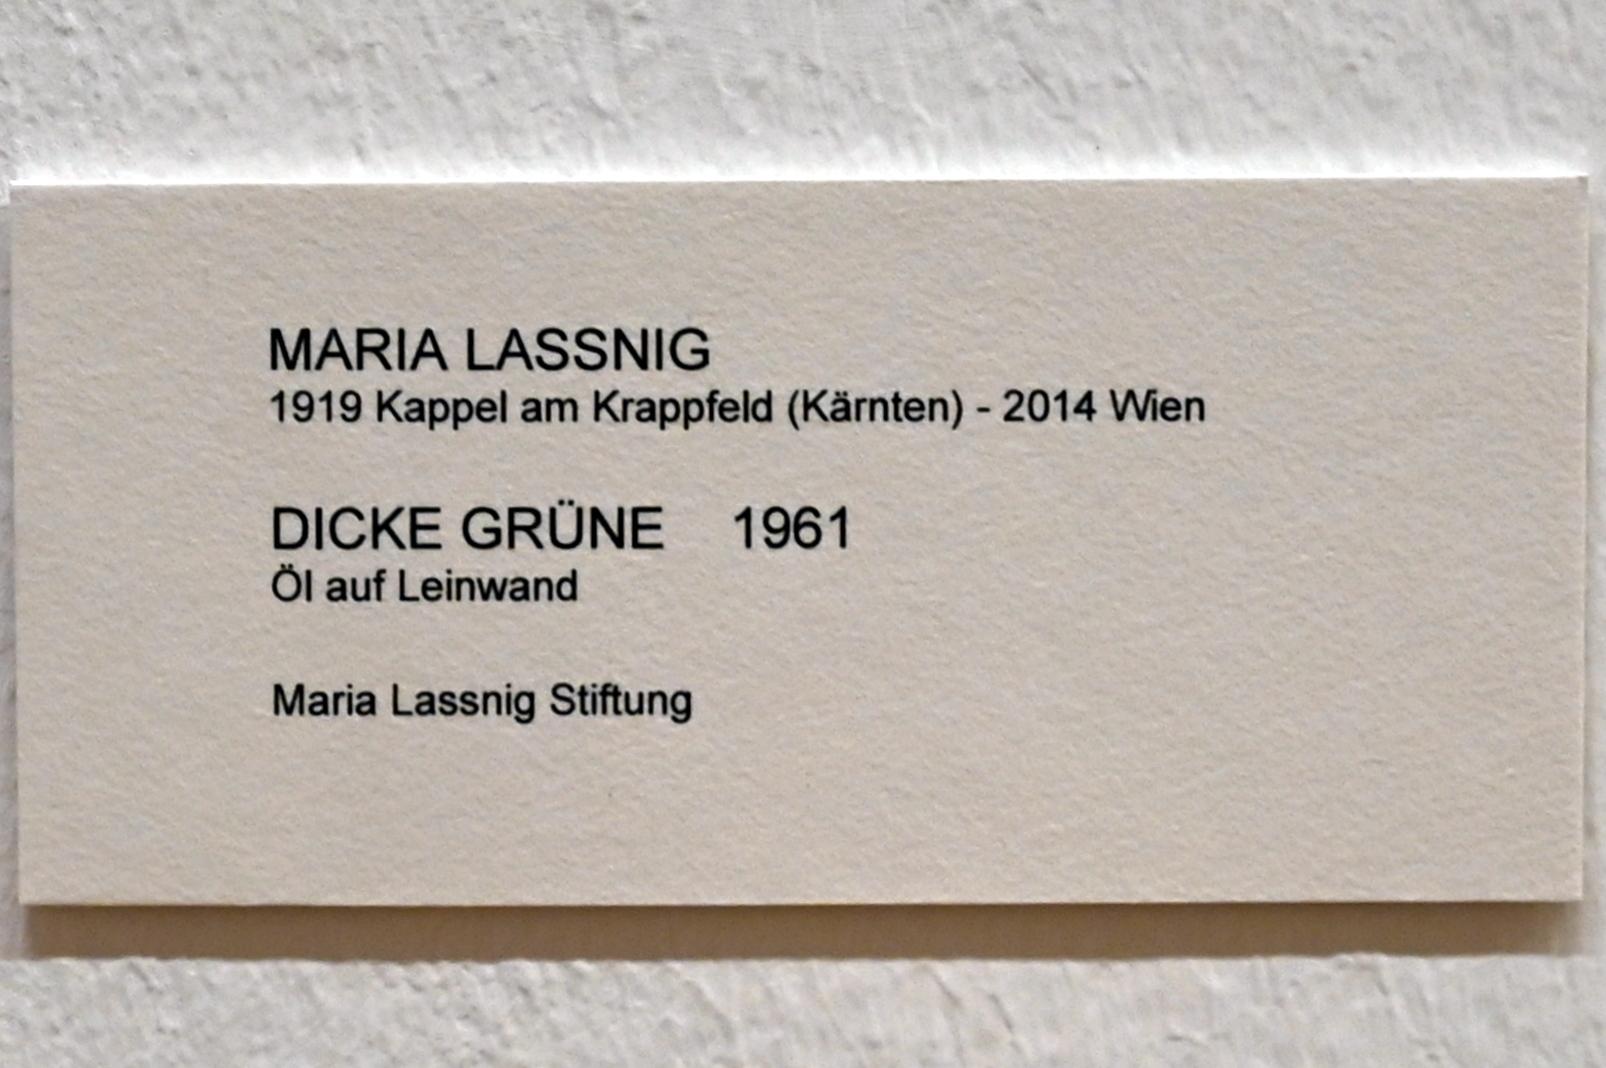 Maria Lassnig (1945–2011), Dicke Grüne, Bonn, Kunstmuseum, Ausstellung "Maria Lassnig - Wach bleiben" vom 10.02. - 08.05.2022, Saal 4, 1961, Bild 2/2